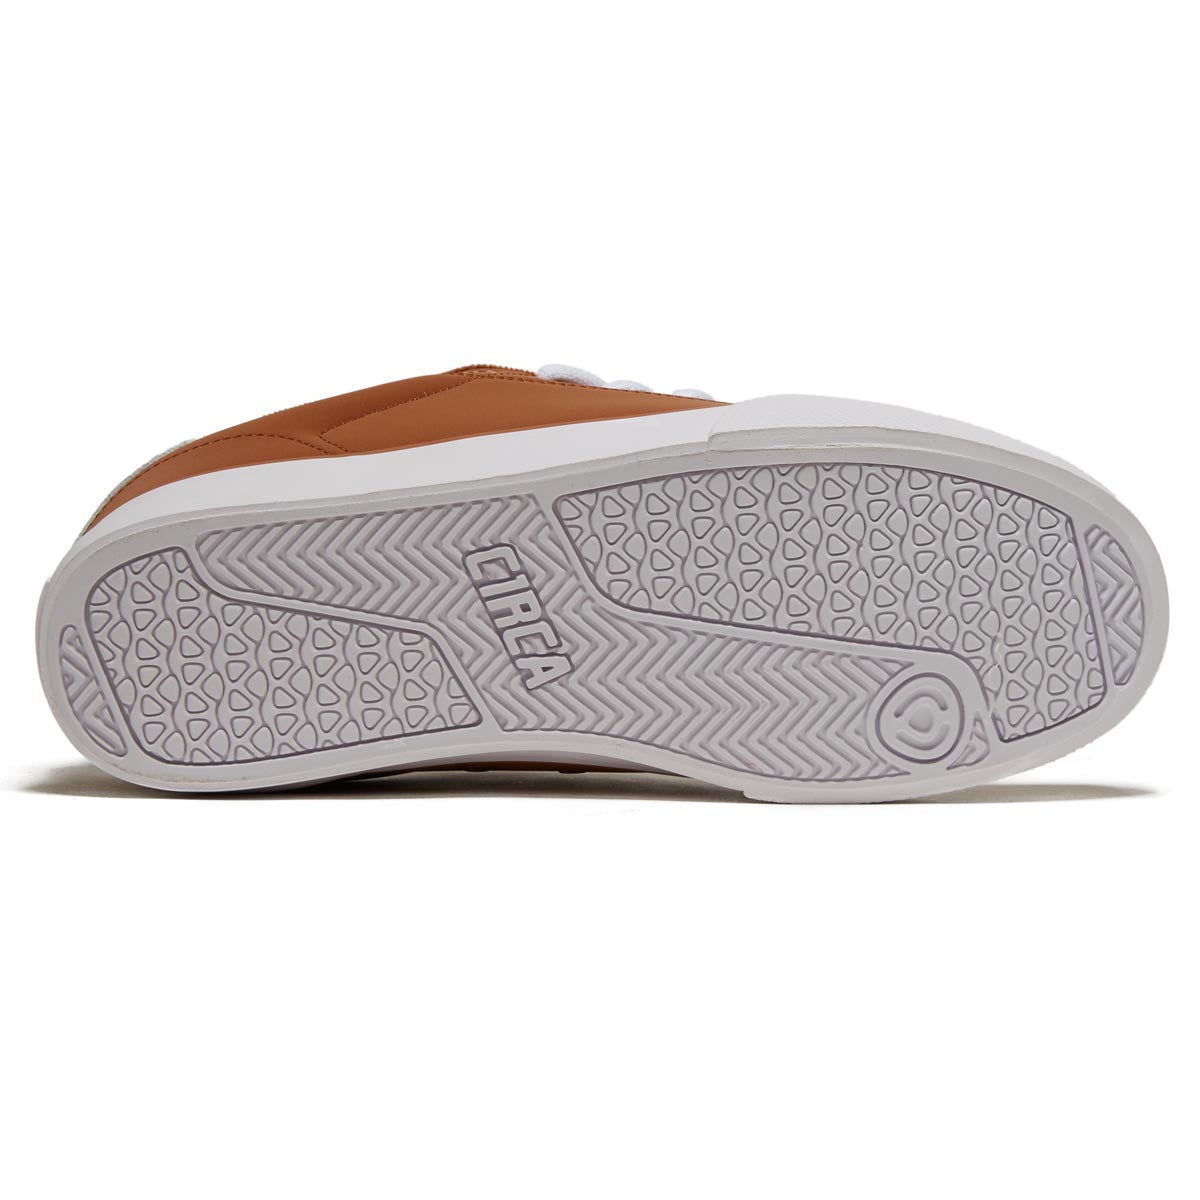 C1rca AL 50 Shoes - Tawny Brown/White image 4